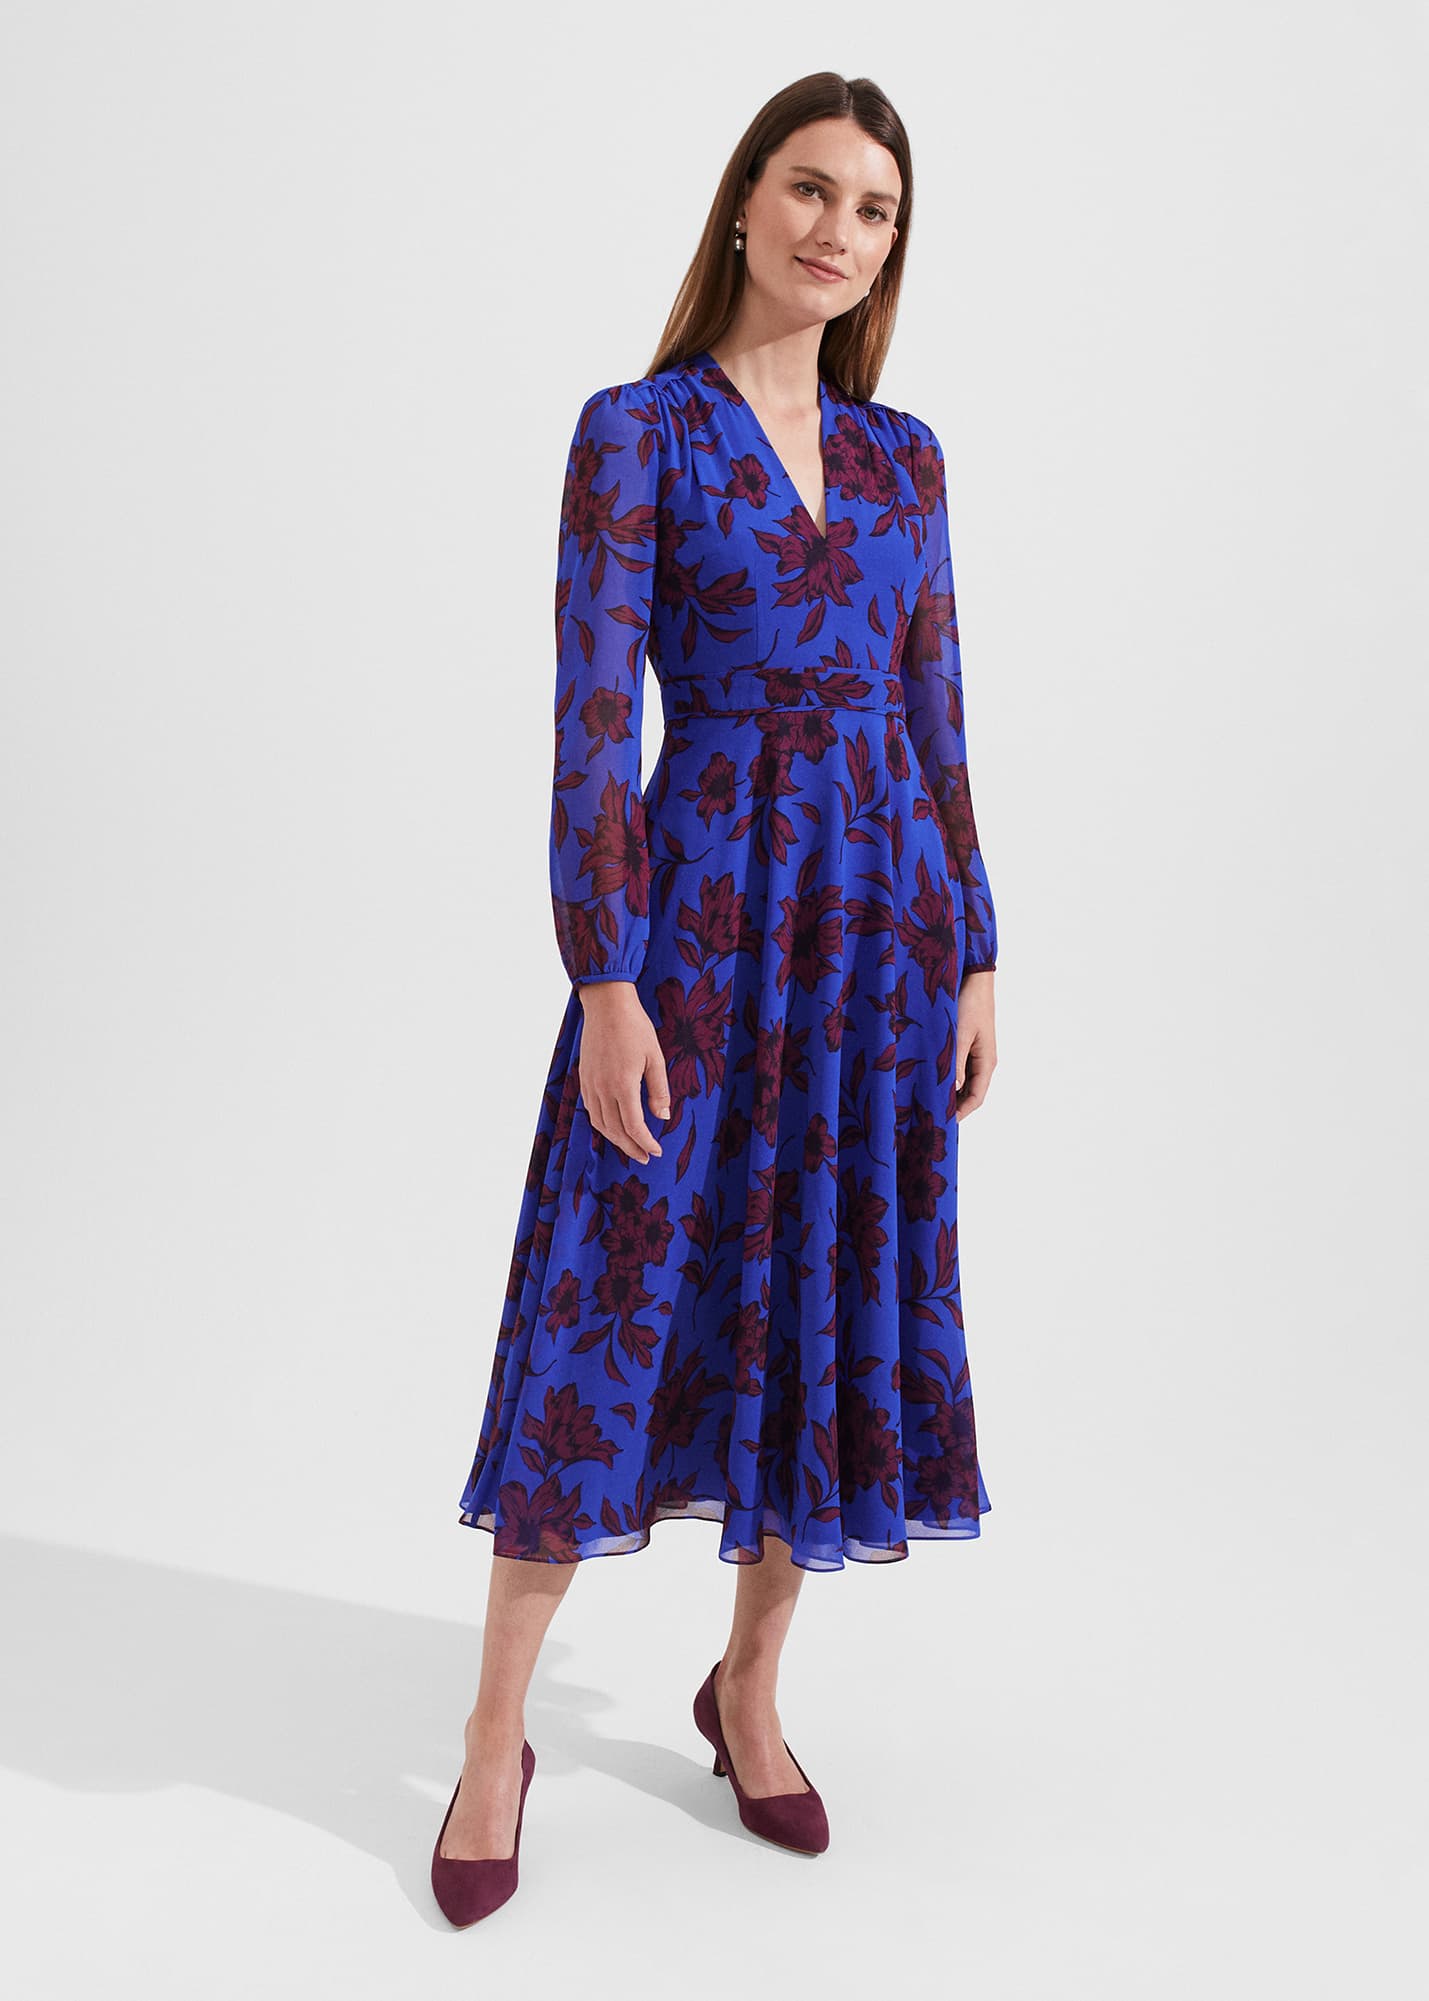 Hobbs Women's Petite Aurora Fit and Flare Printed Dress - Blue Burgundy